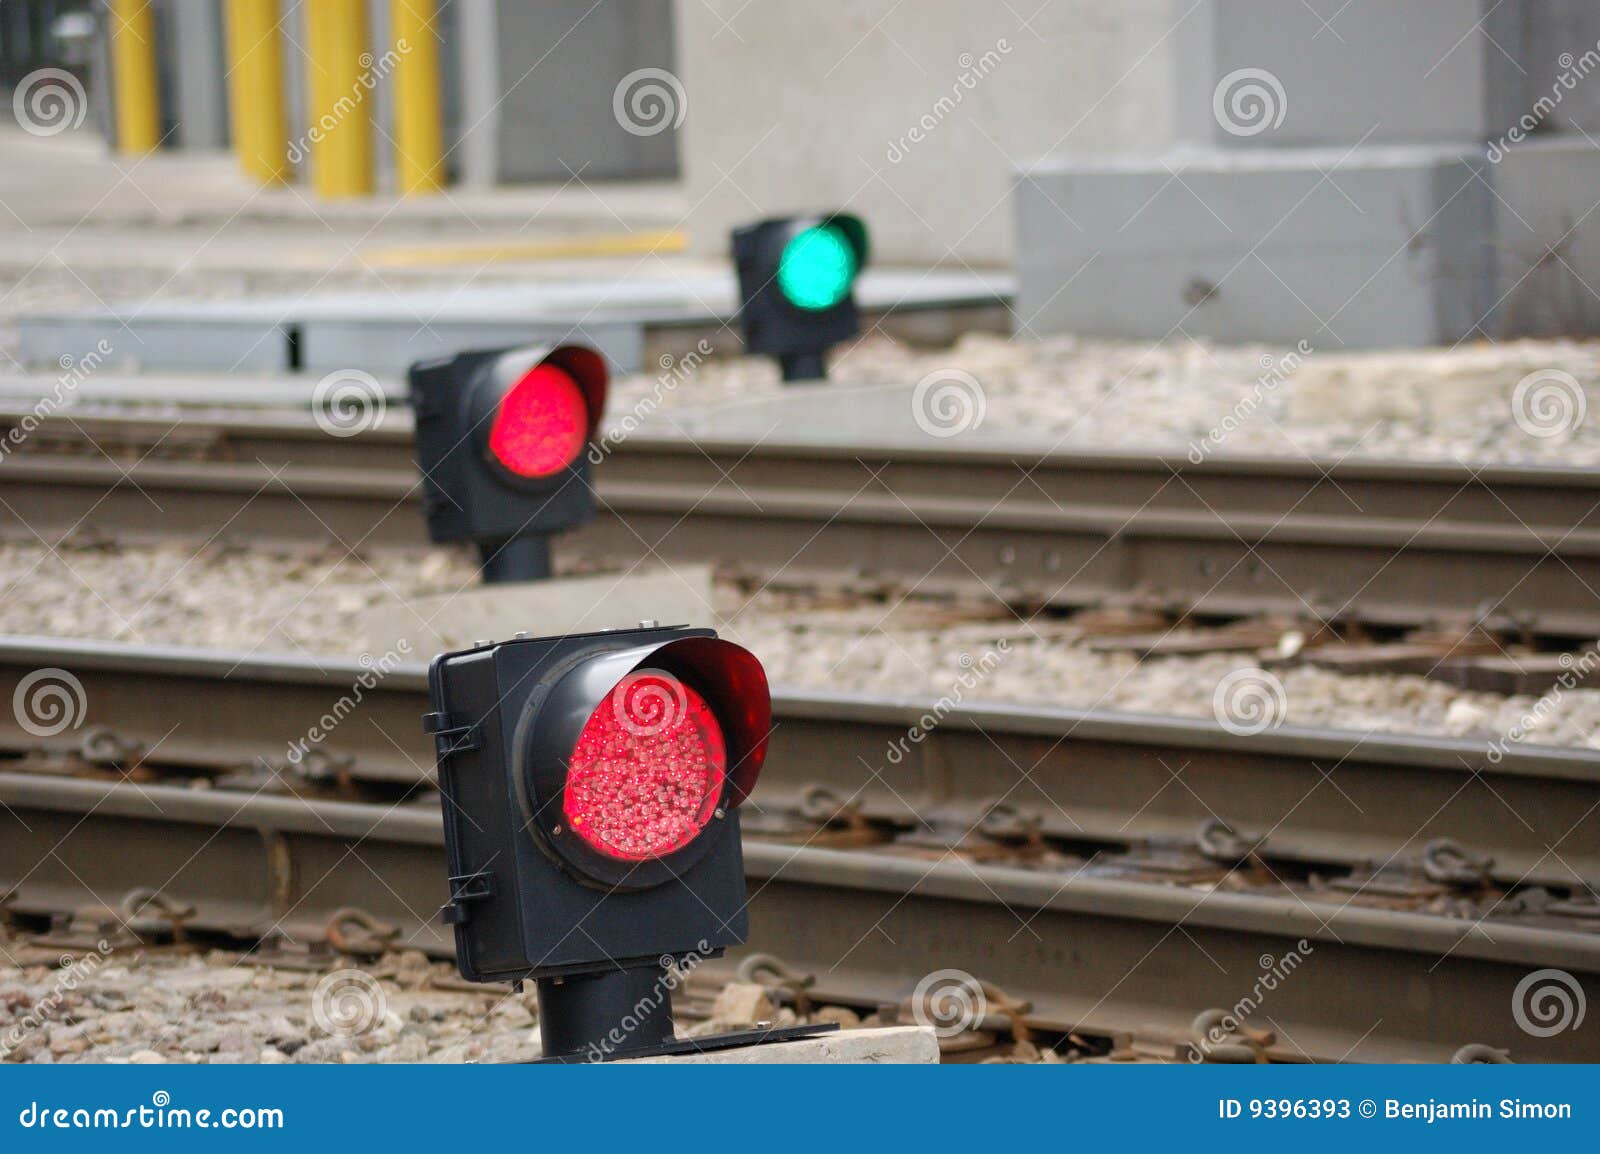 Small LED train signals along the tracks.